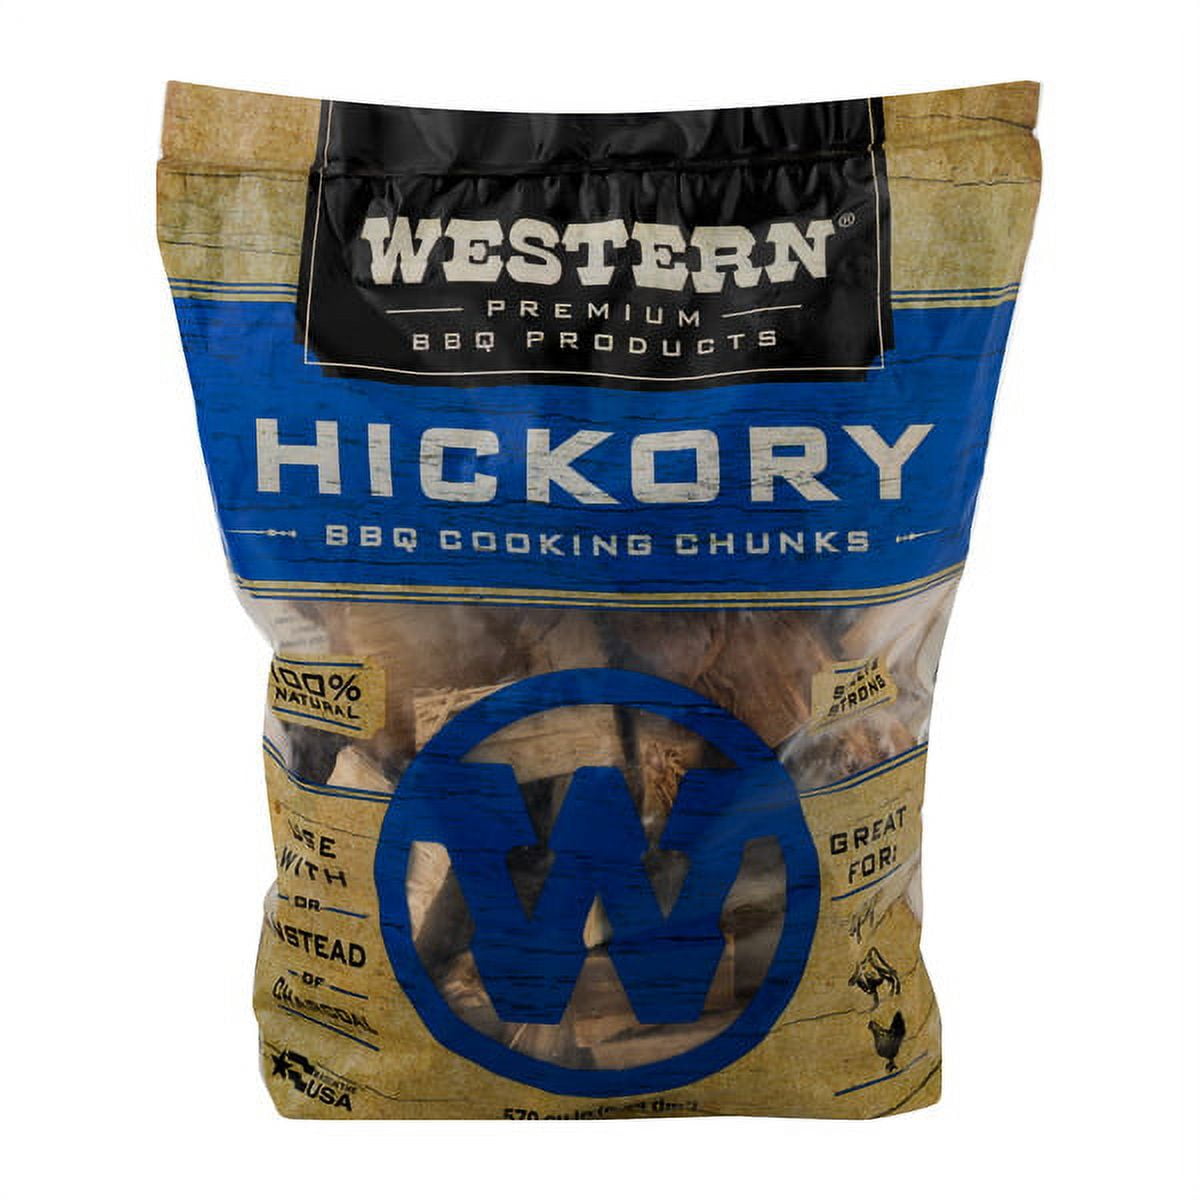 Hickory BBQ Cooking Chunks - Western Premium BBQ